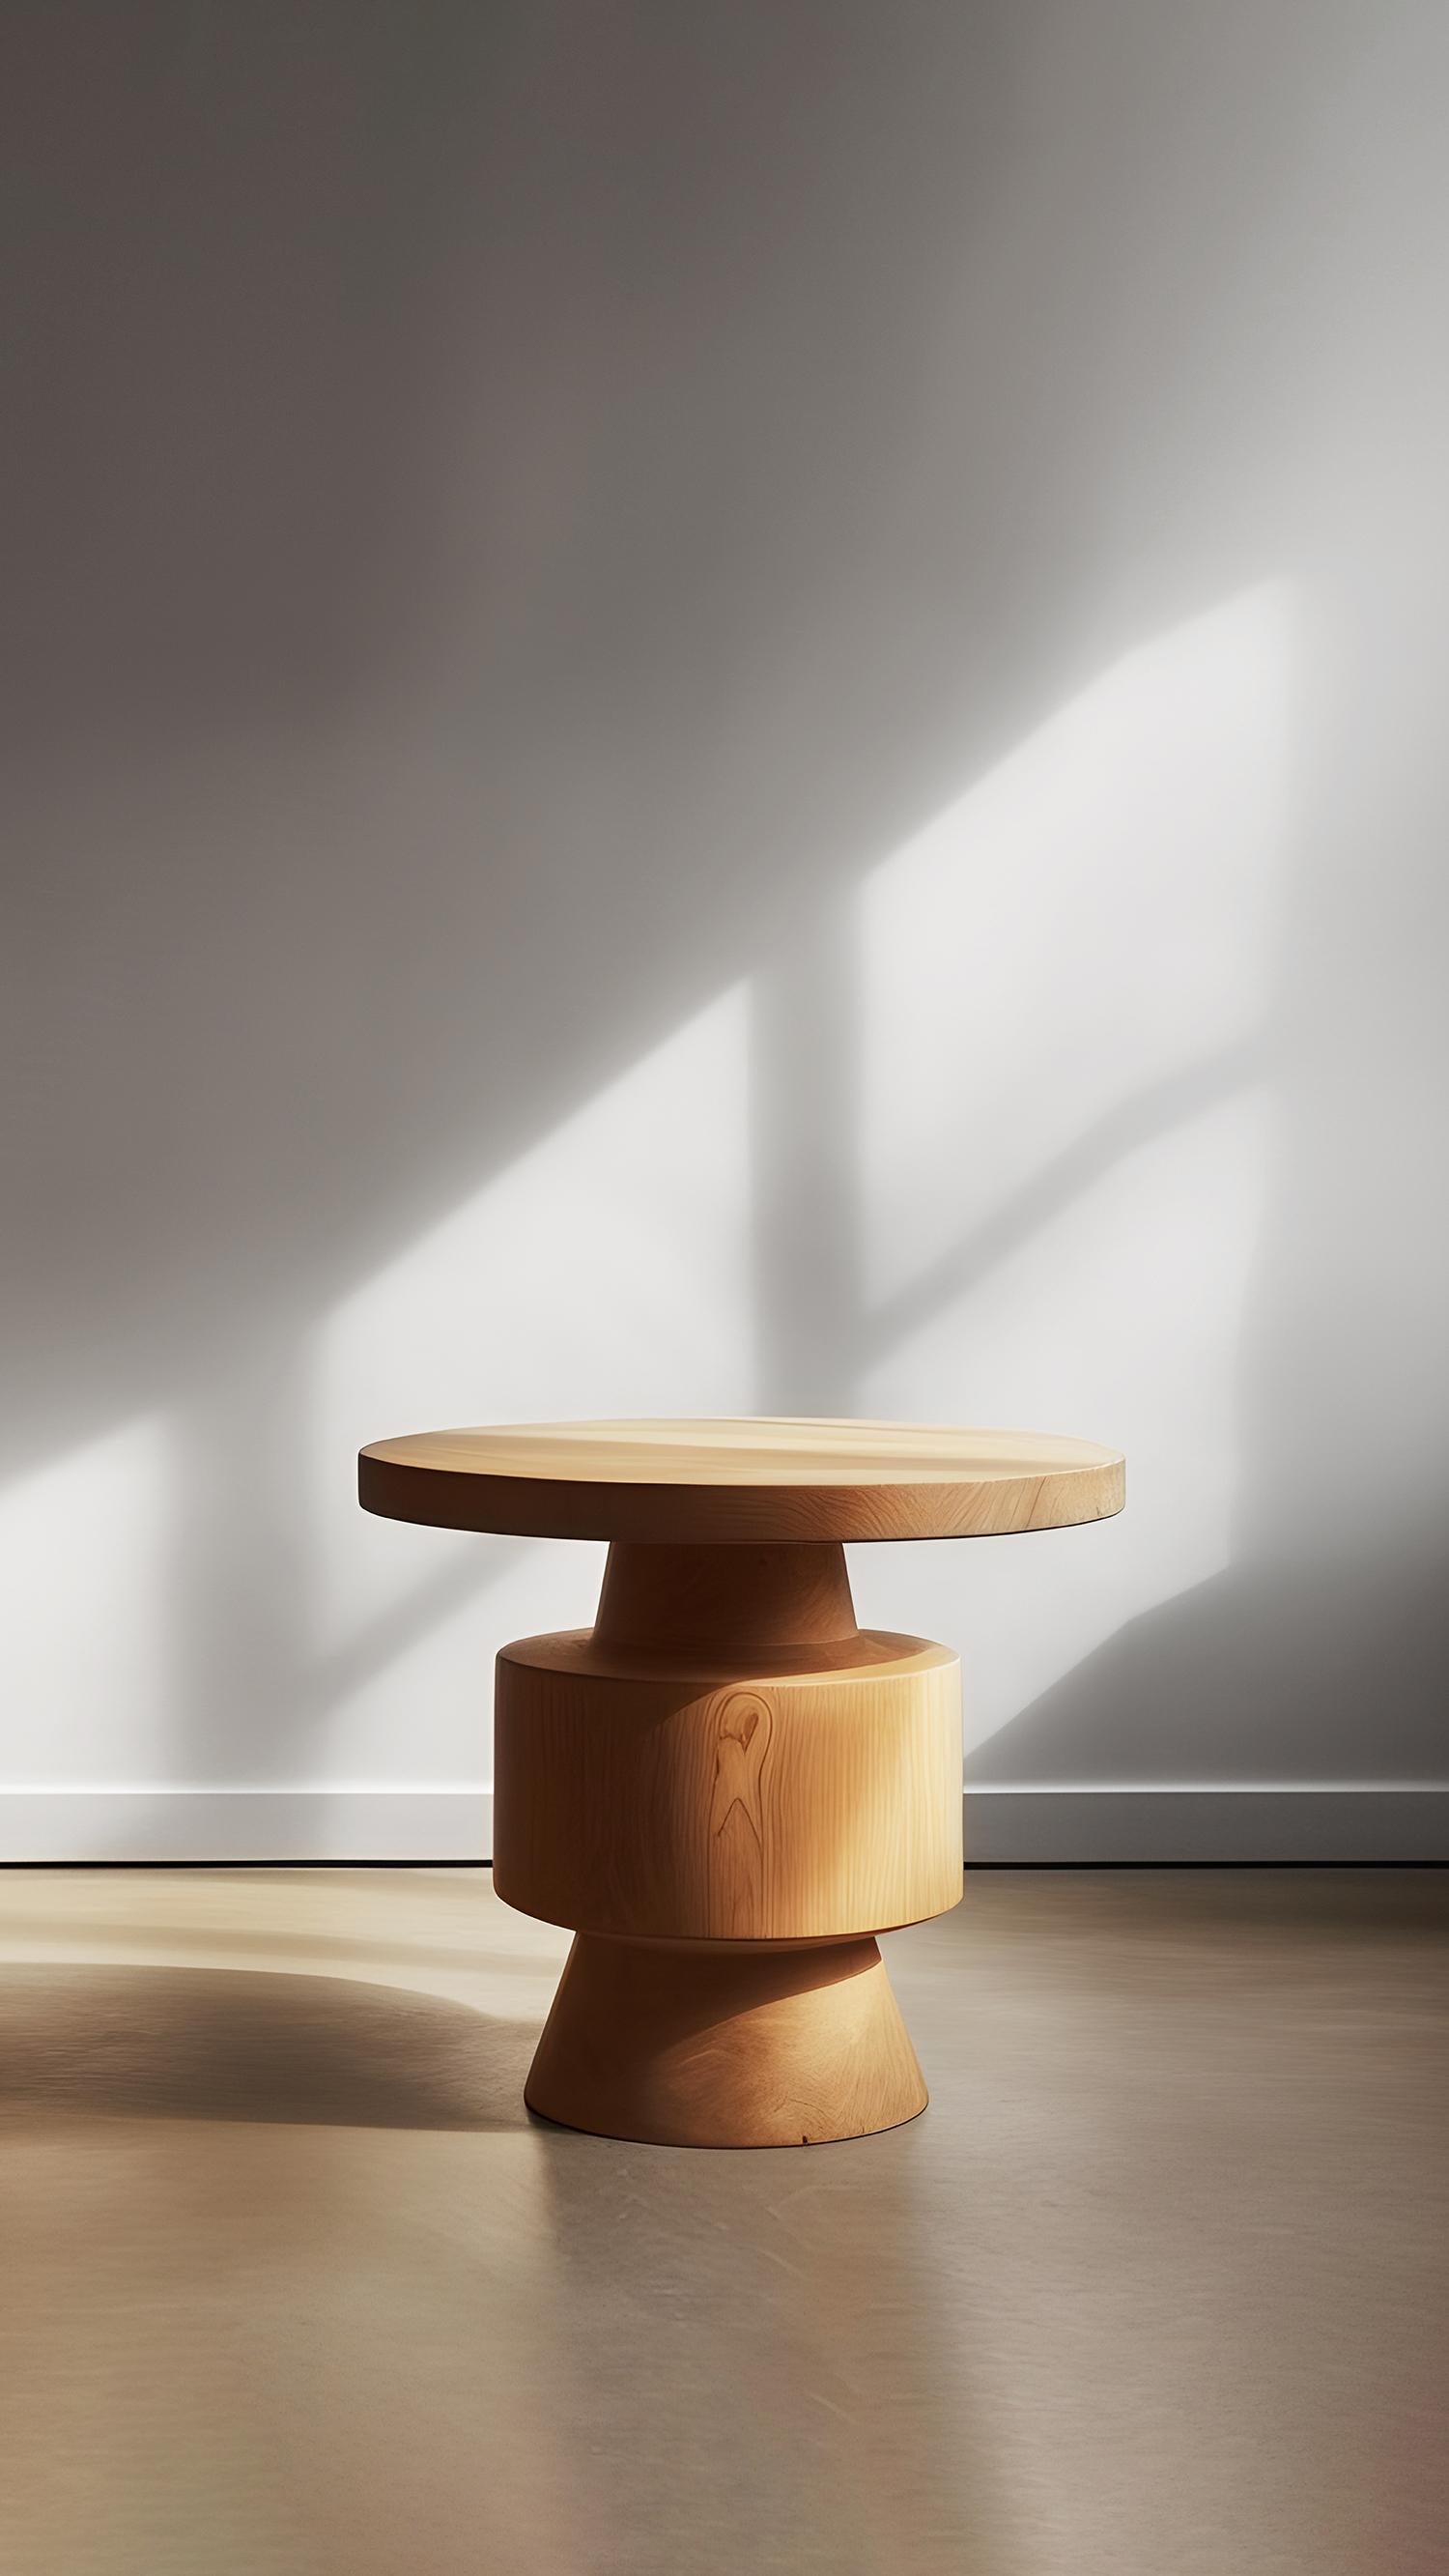 modern side stool designs